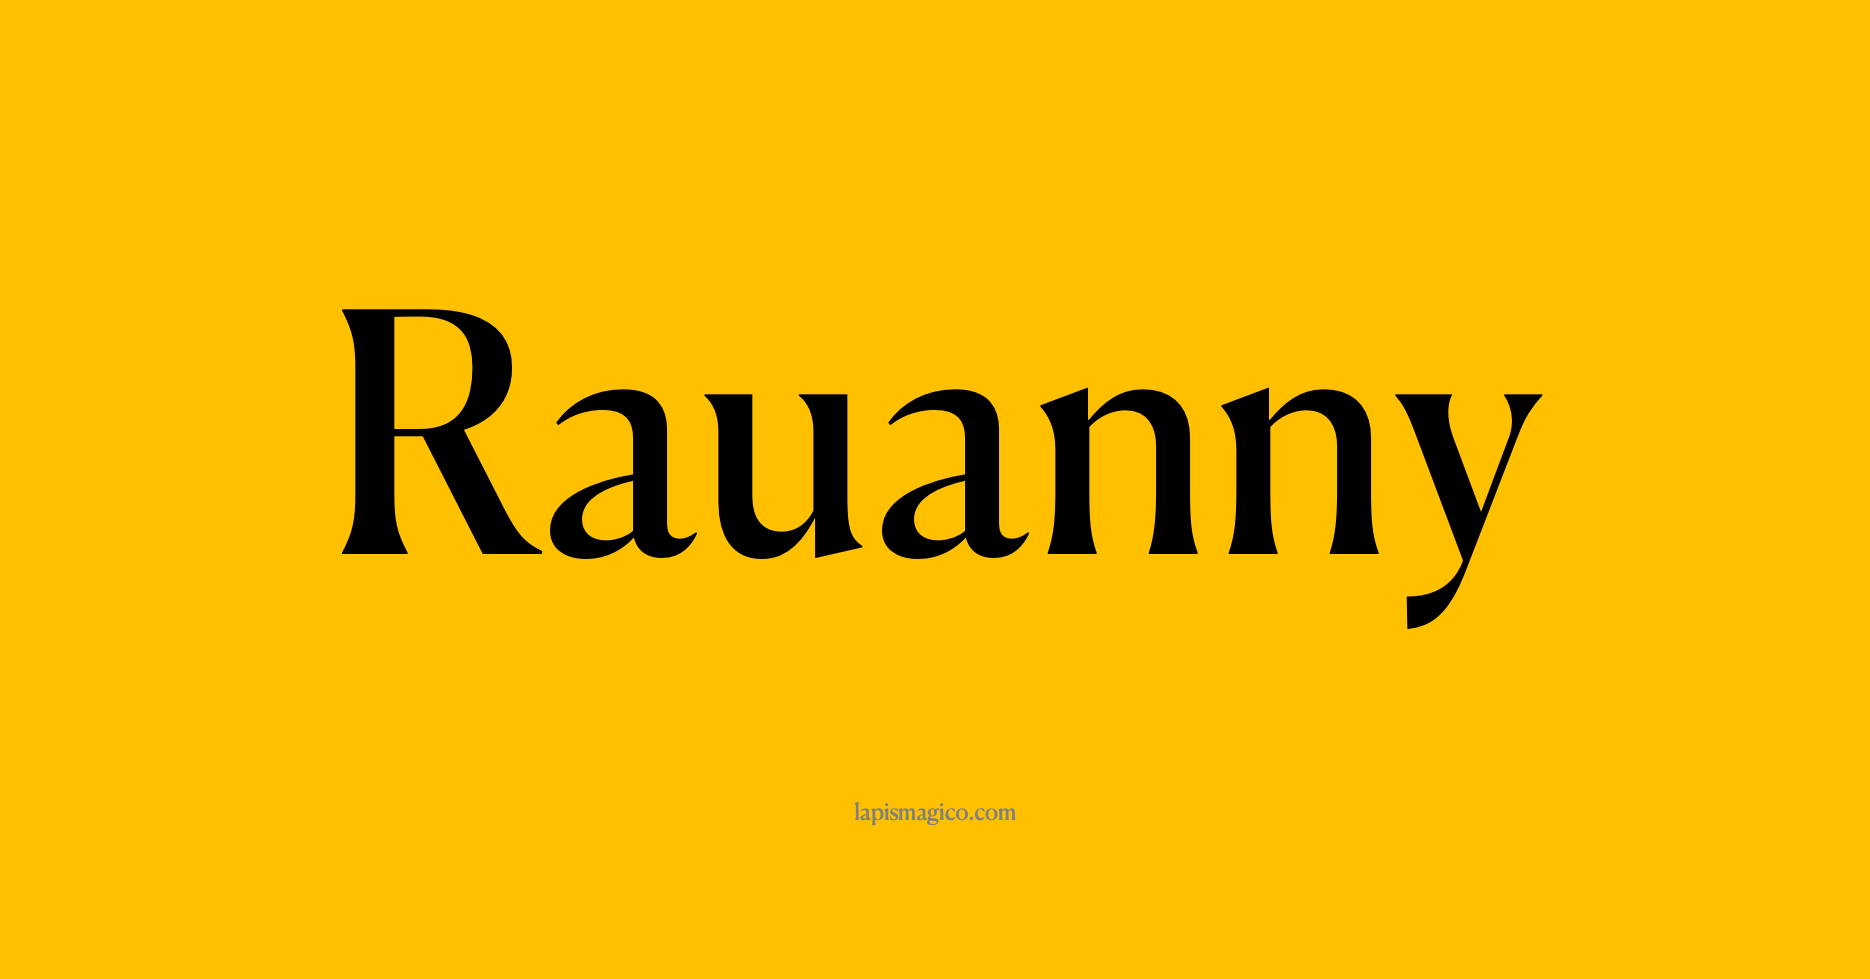 Nome Rauanny